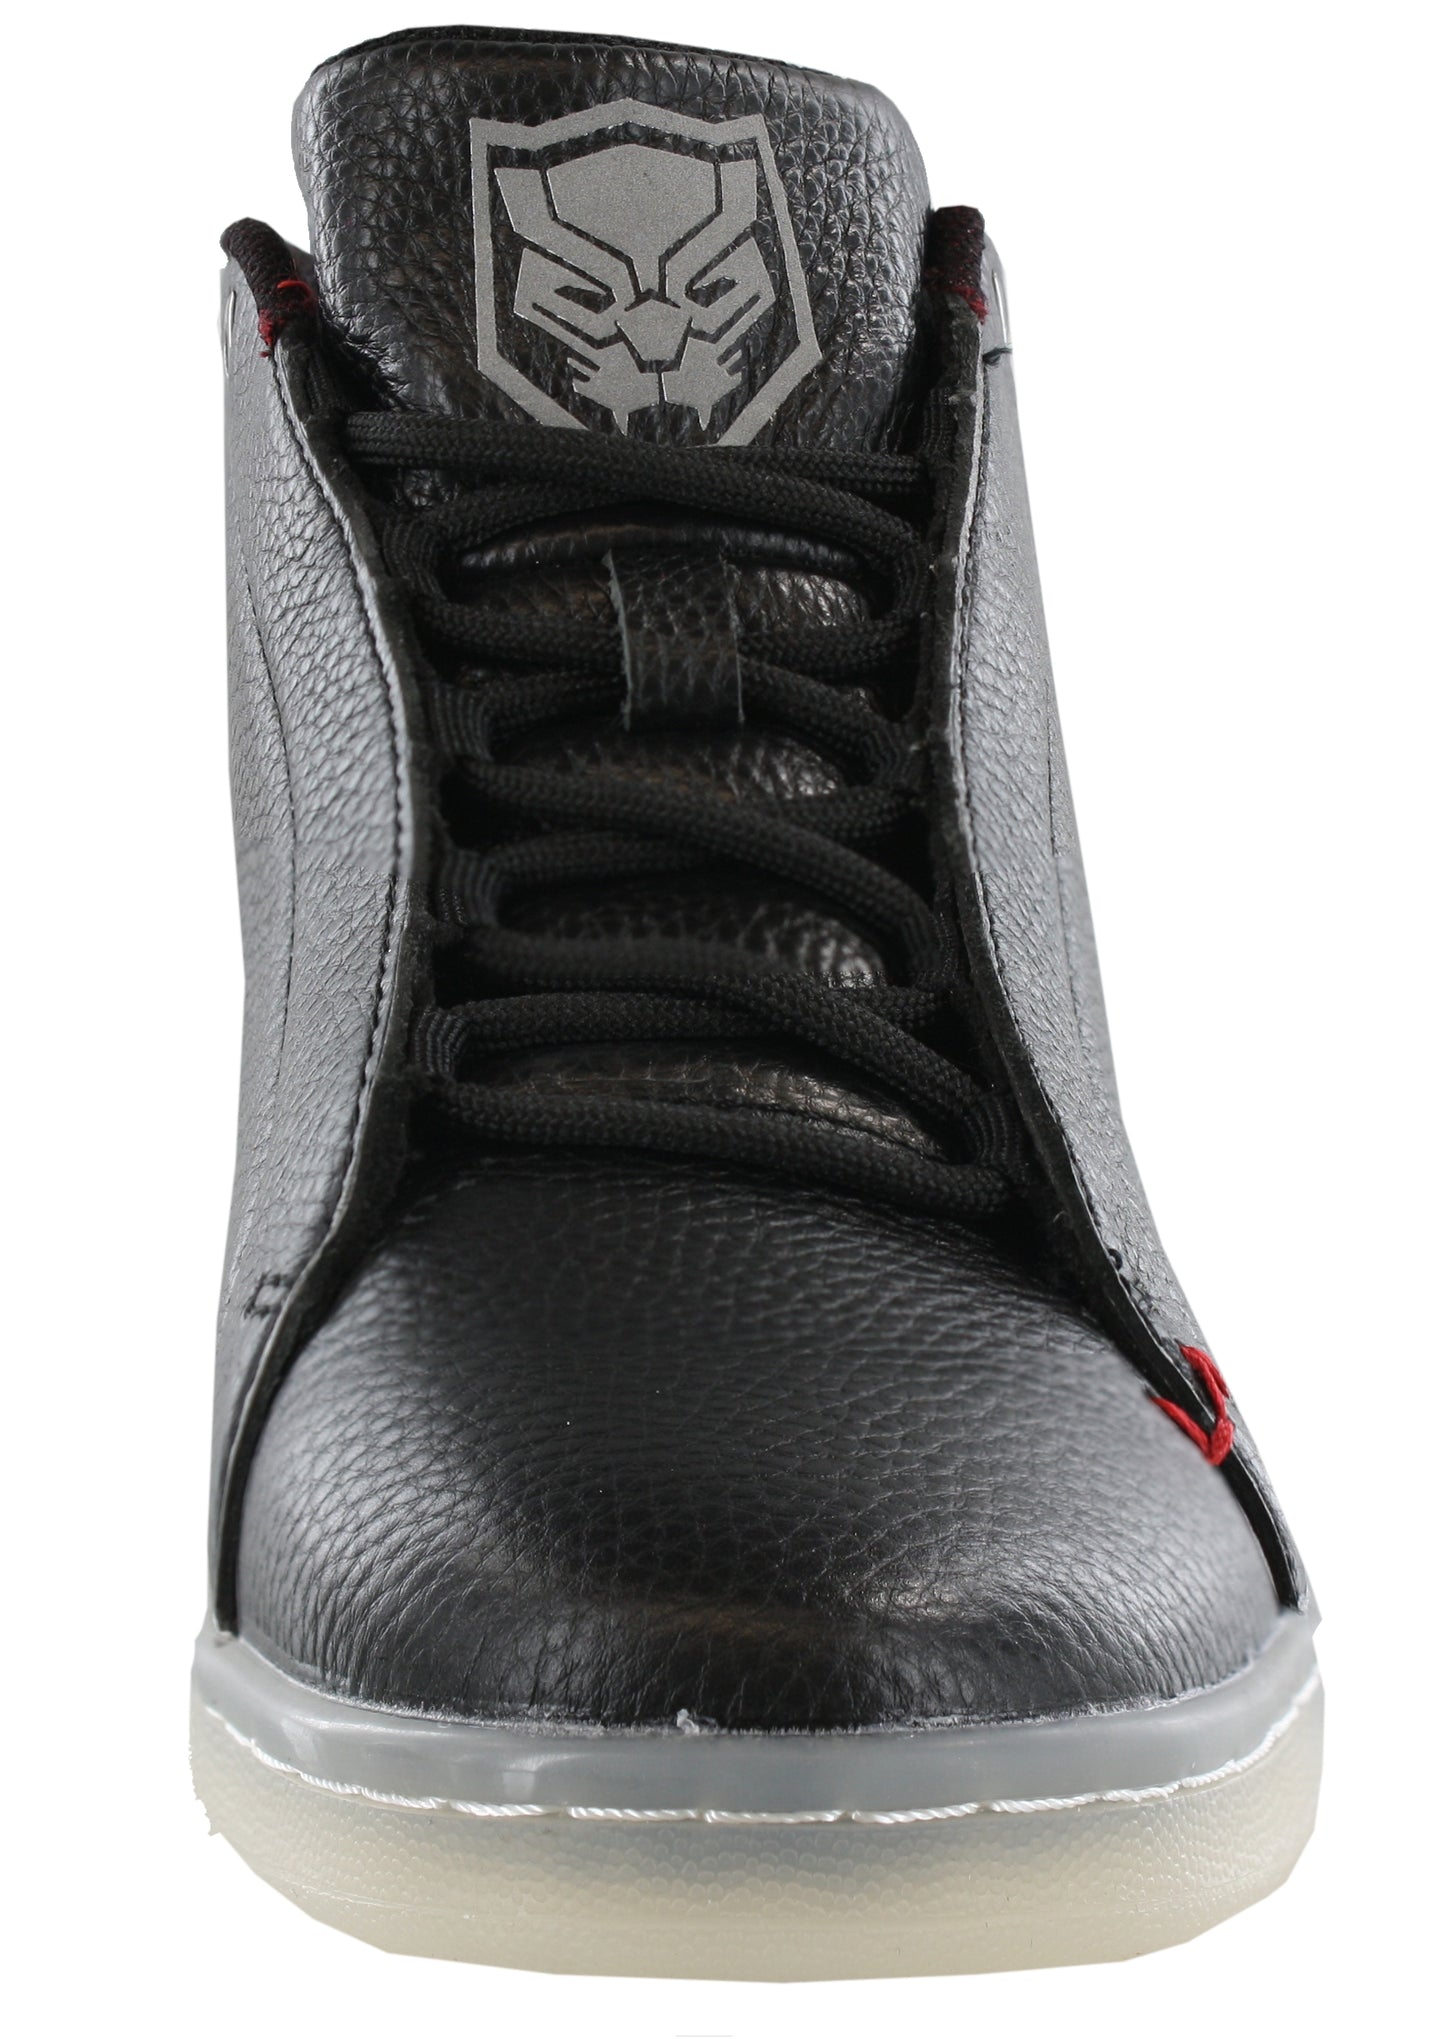 
                  
                    Marvel Black Panther Vibranium Mid Athletic Shoes Mens
                  
                